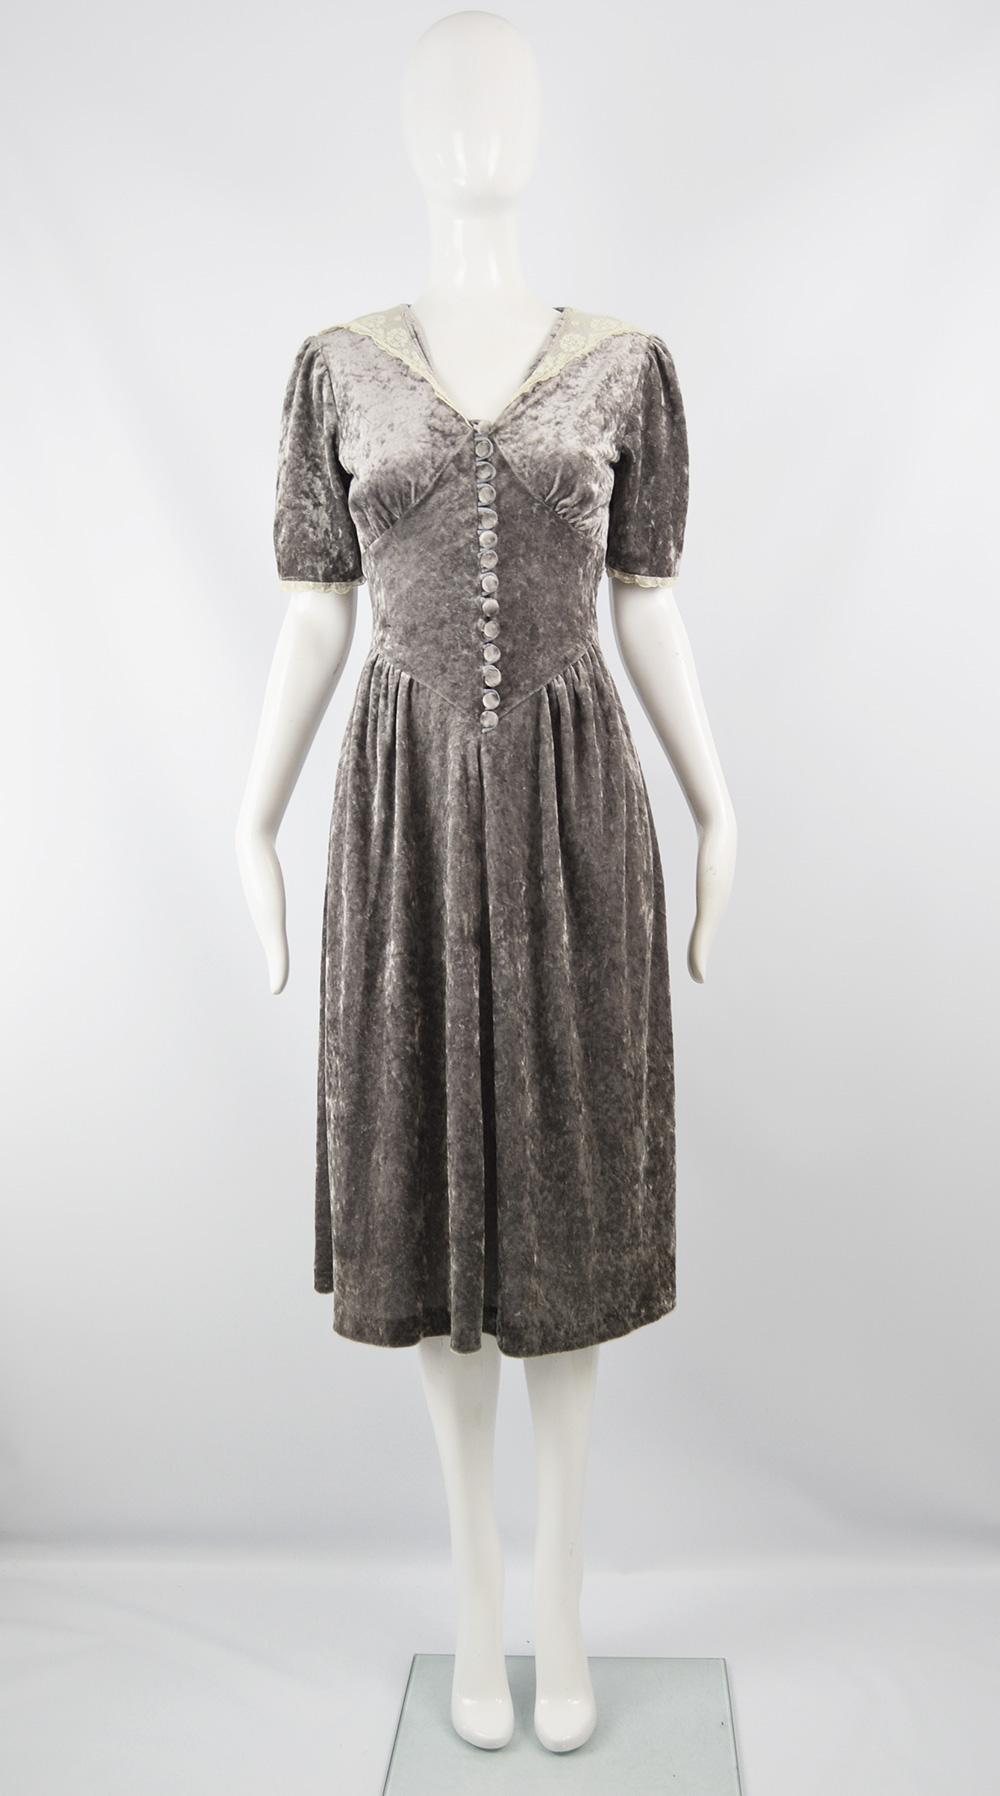 1970s Vintage Silver Panne Velvet & Lace Art Deco Style Mid Length Dress

Size: Marked vintage 12 fits more like a modern UK 10/ US 6/ EU 38. Please check measurements.
Bust - 34” / 86cm
Waist - 28” / 71cm
Hips - 44” / 112cm
Length (Shoulder to Hem)